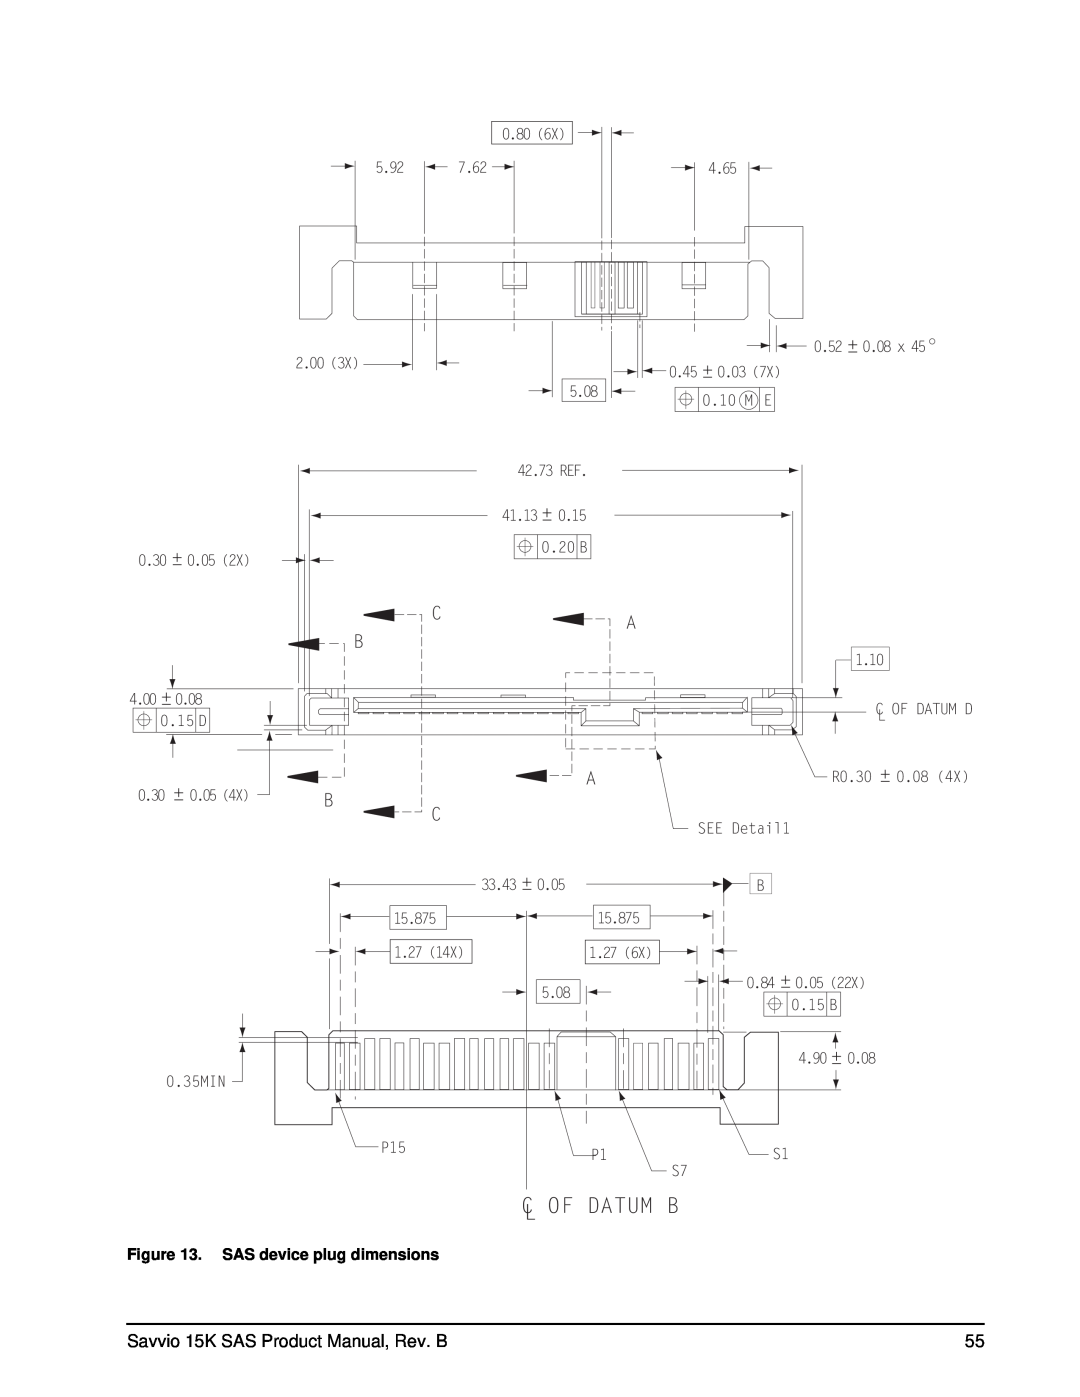 Seagate ST936751SS, ST973451SS manual C Of Datum B L, SAS device plug dimensions 